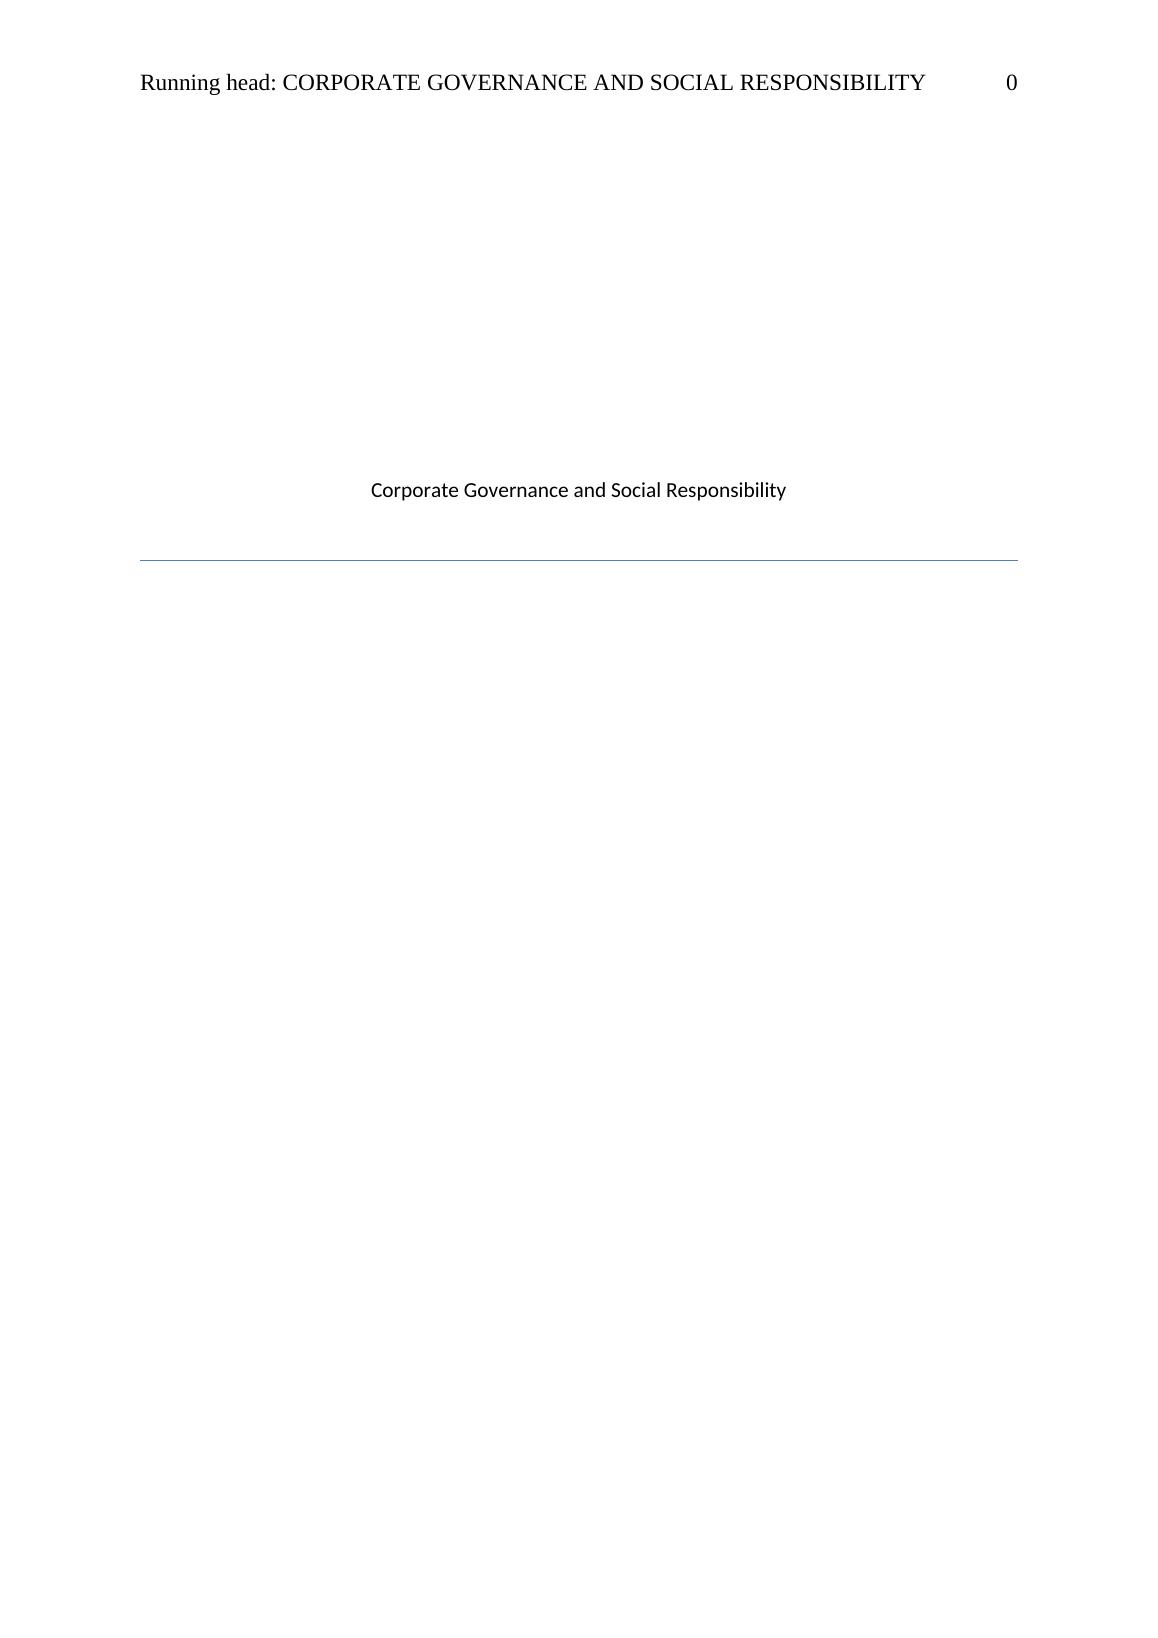 Corporate Governance and Social Responsibility Executive Summary_1